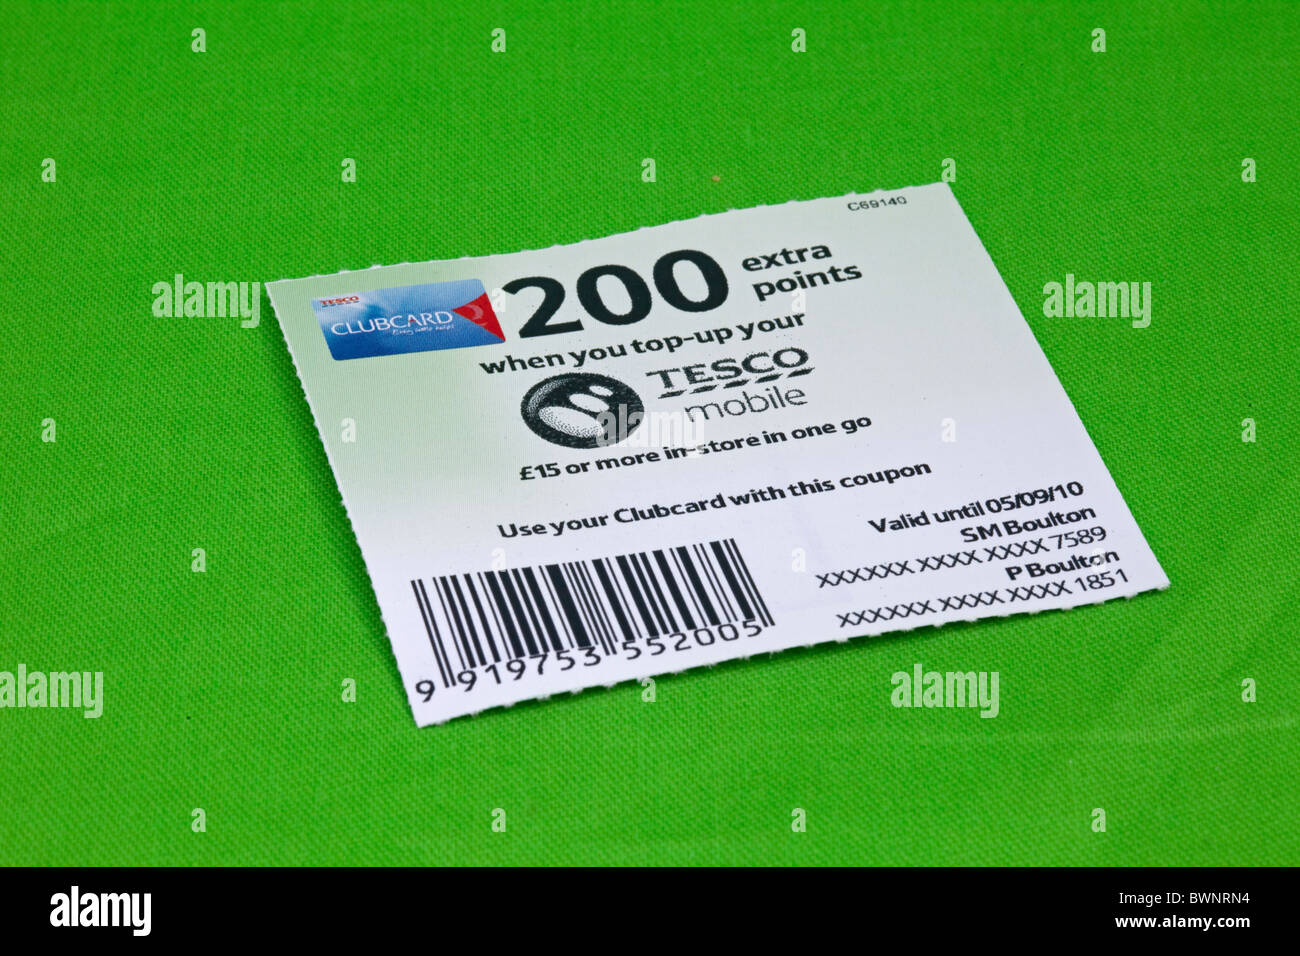 Tesco club card points coupon UK Stock Photo